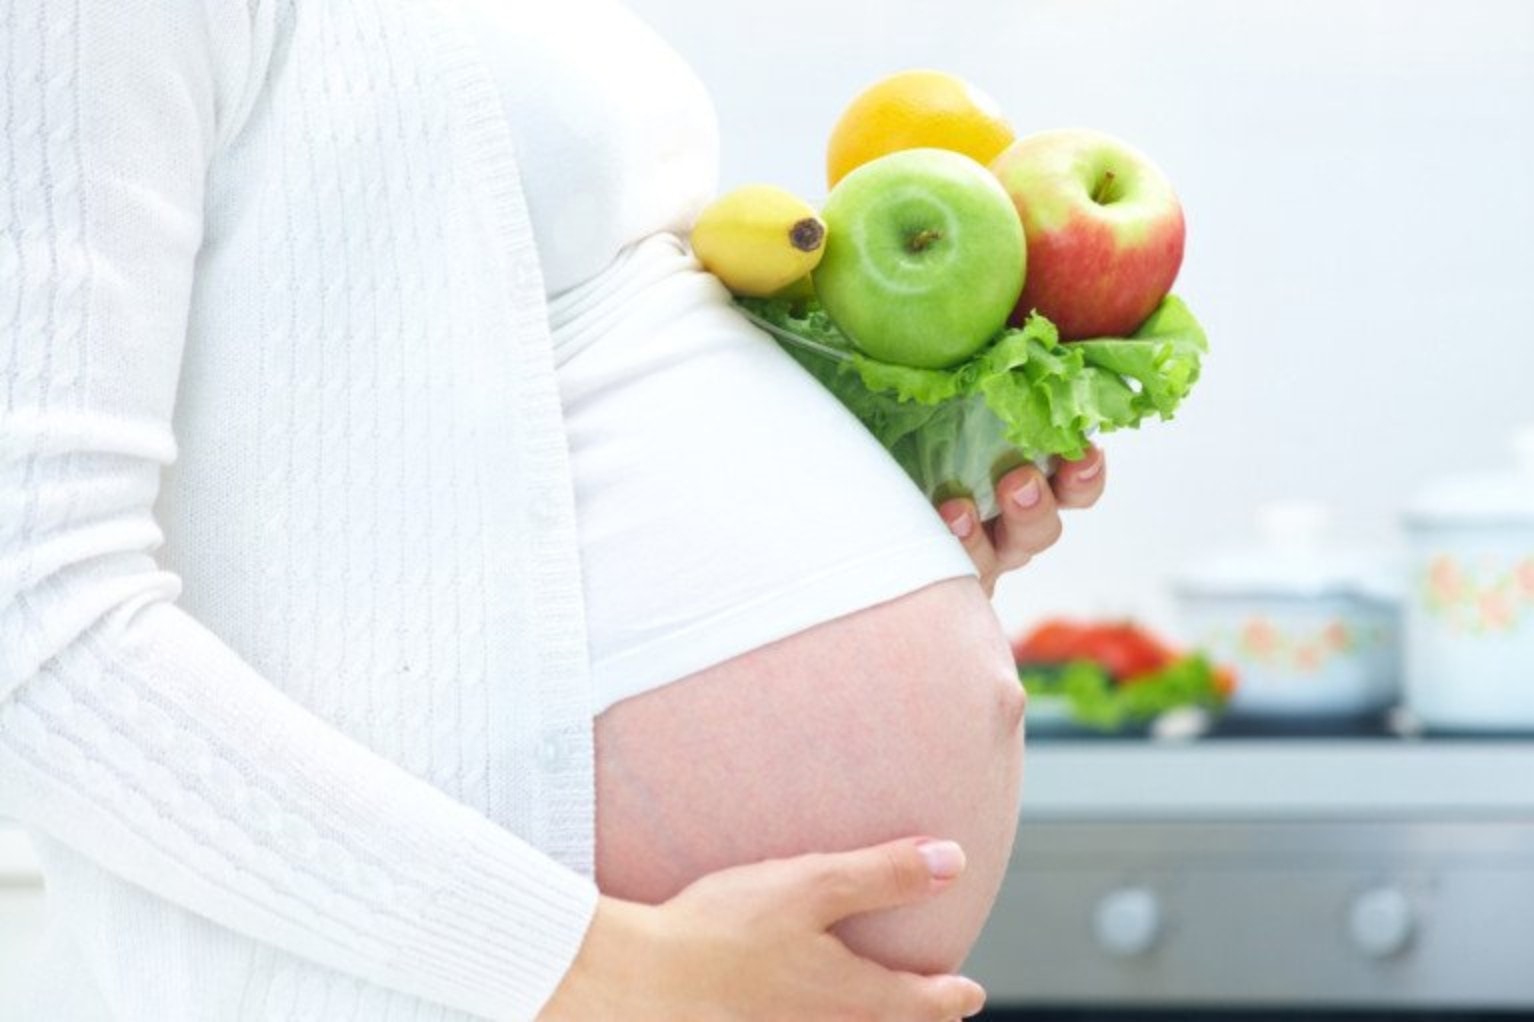 pregnancy yoga blog - Blog-nutrition-healthy-eating-during-pregnancy-767x511@2x